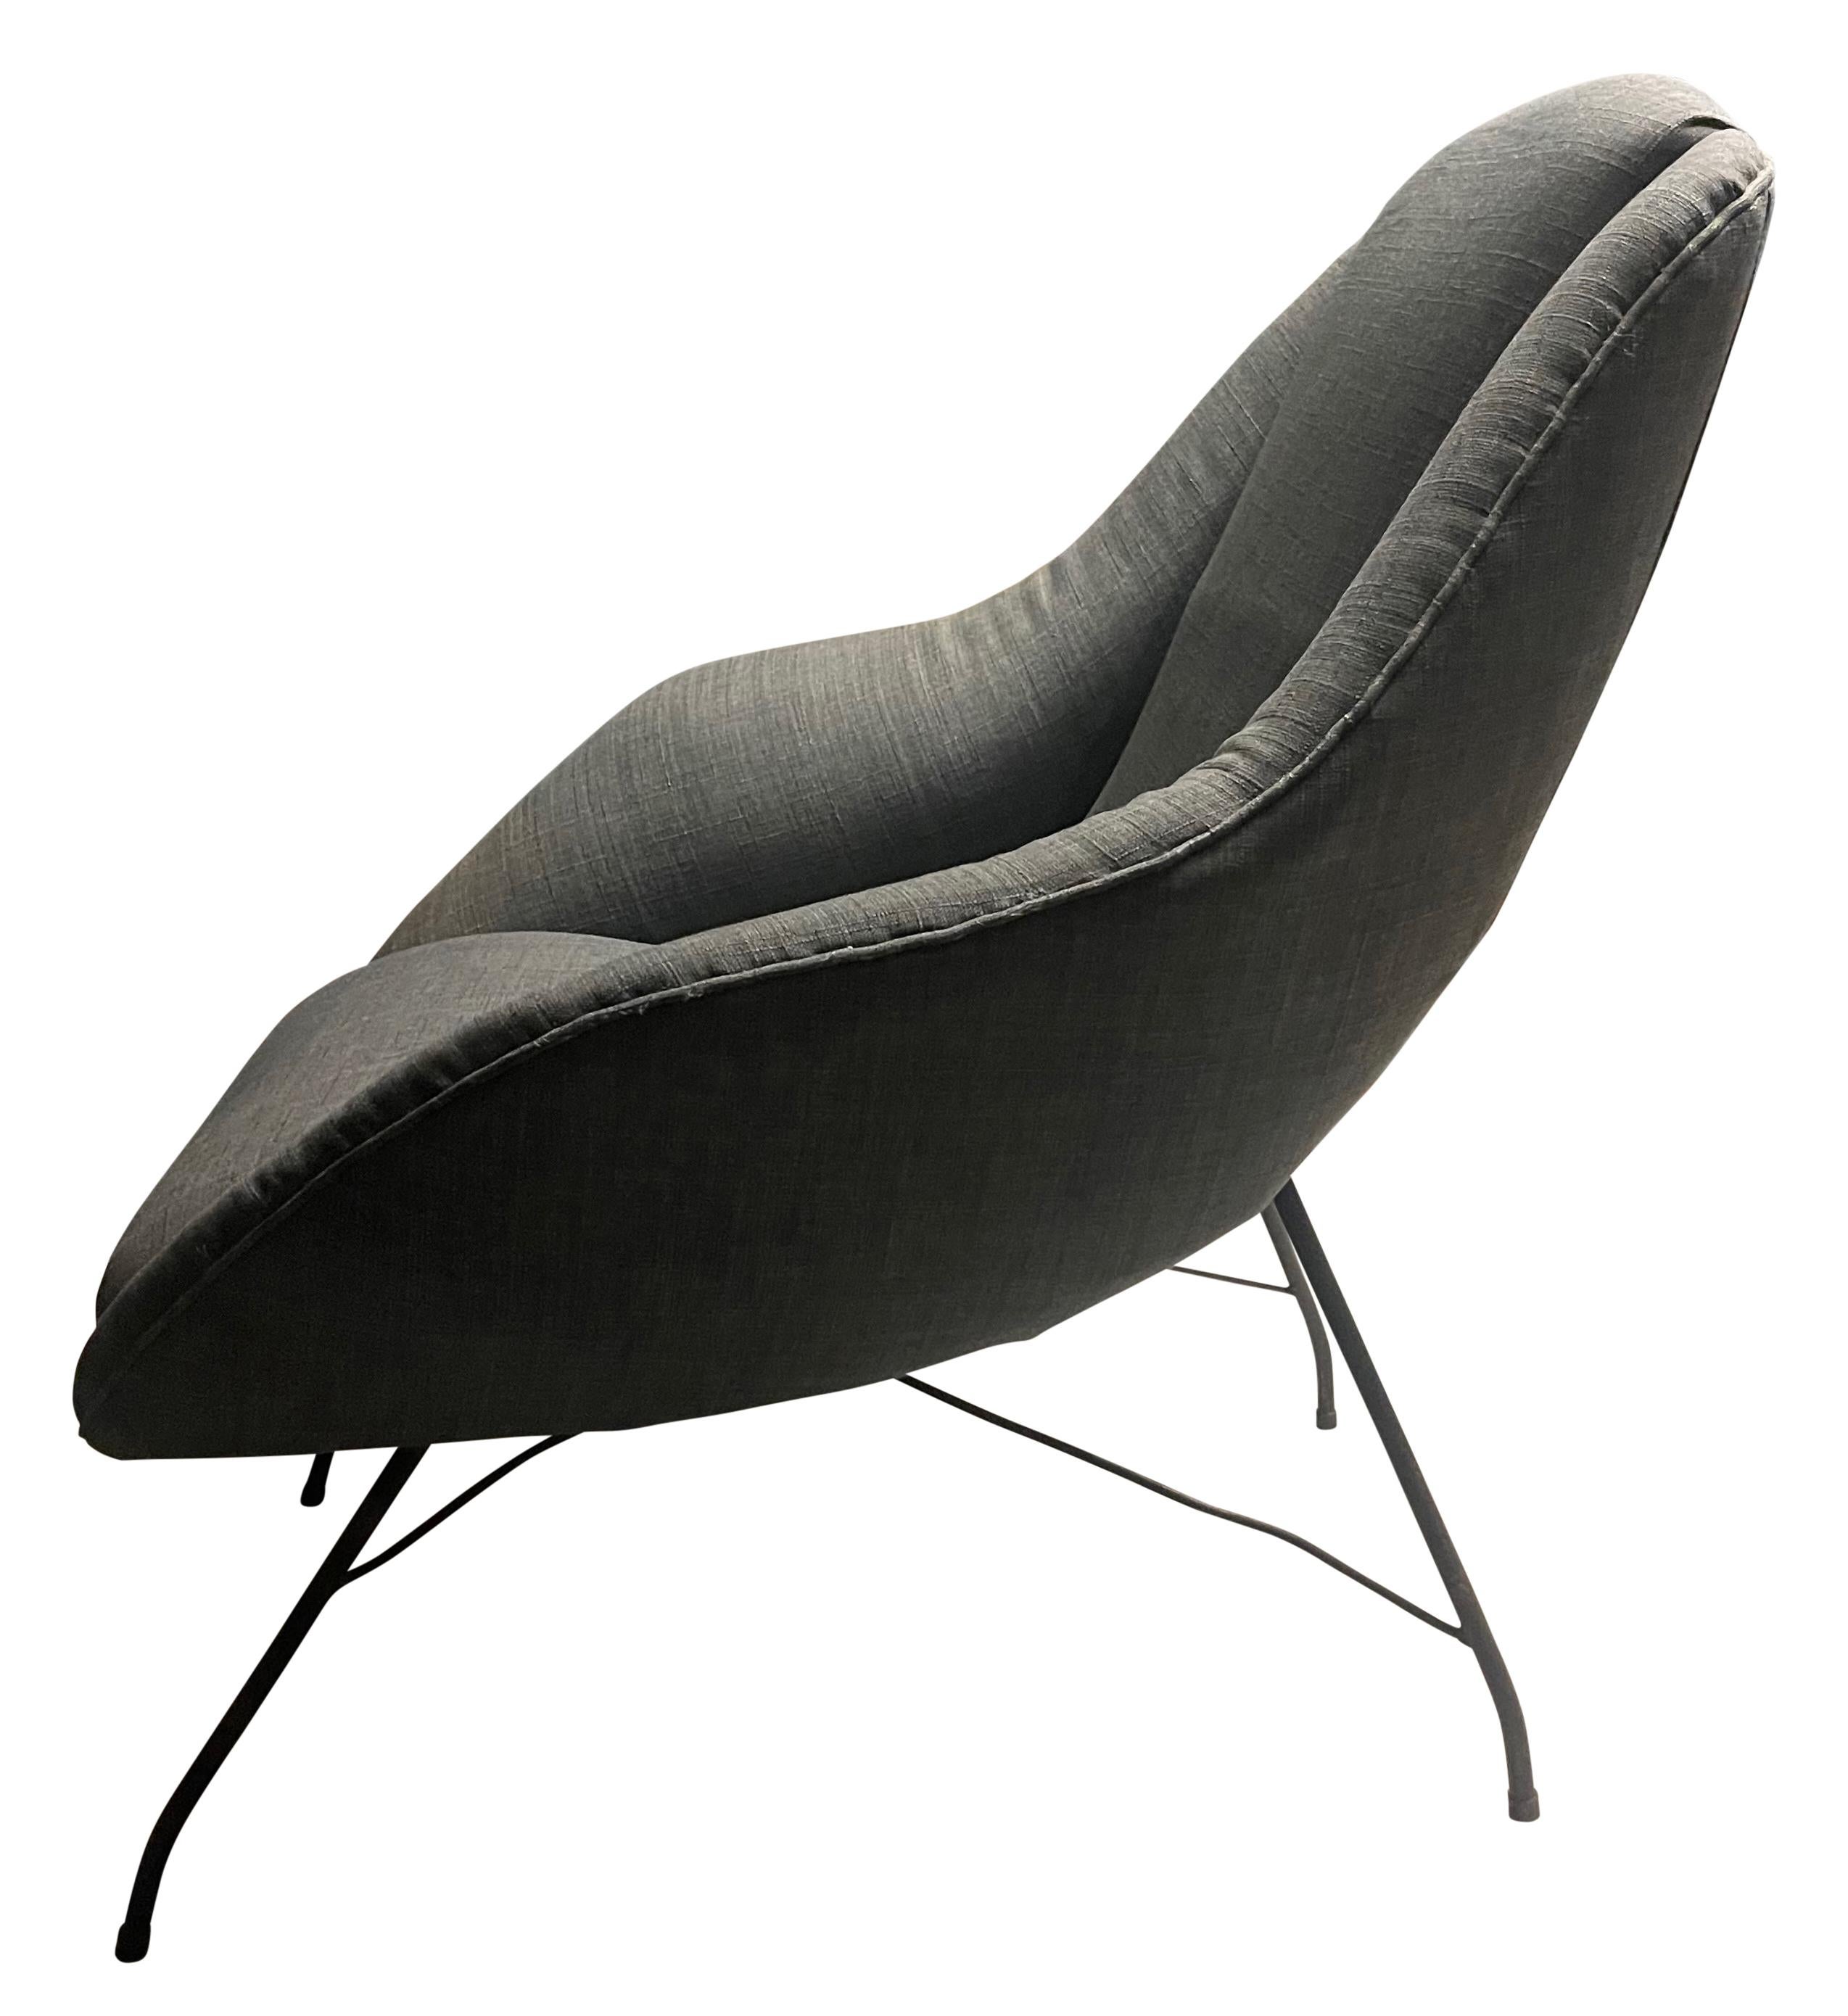 Brazilian Carlo Hauner Martin Eisler Concha Lounge Chair, Brazil, 1950 For Sale